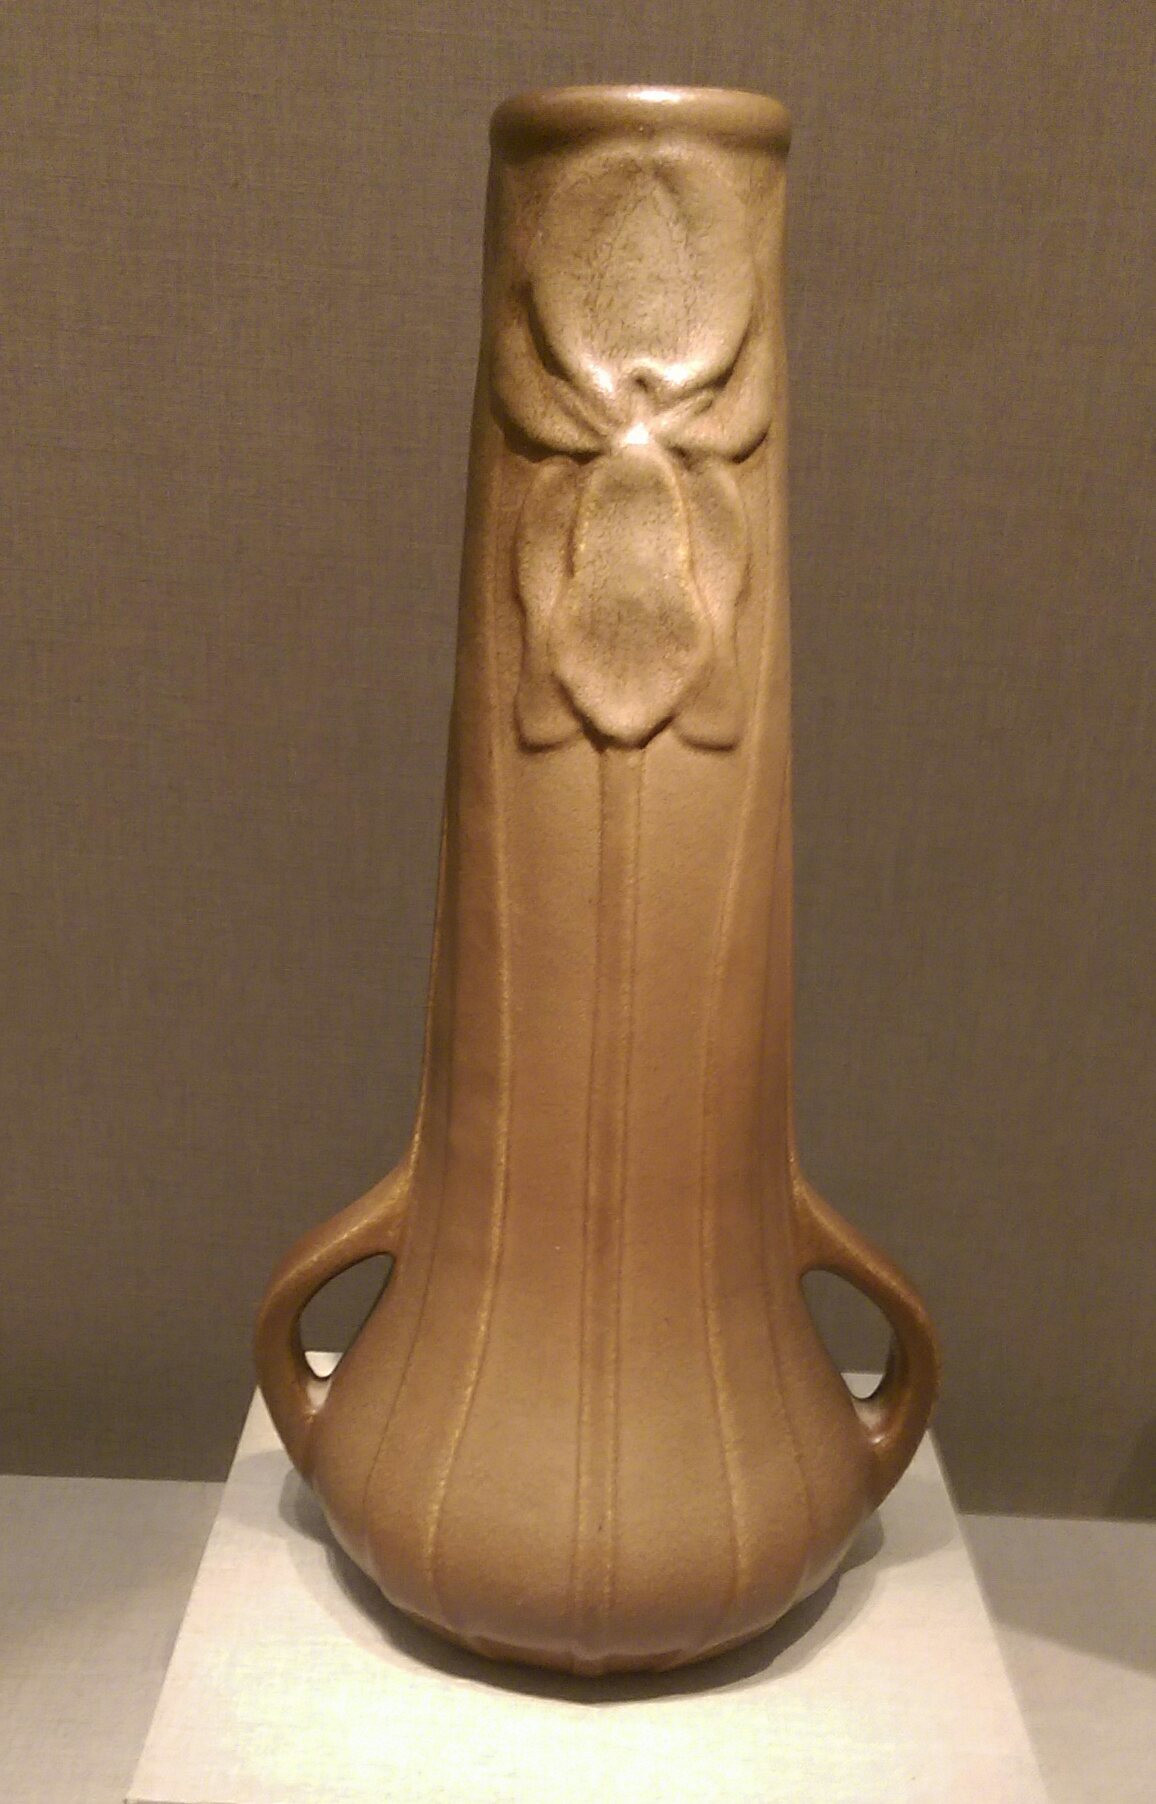 27 Stylish Hand Turned Wooden Vases 2023 free download hand turned wooden vases of van briggle pottery wikipedia regarding artus van briggle vase